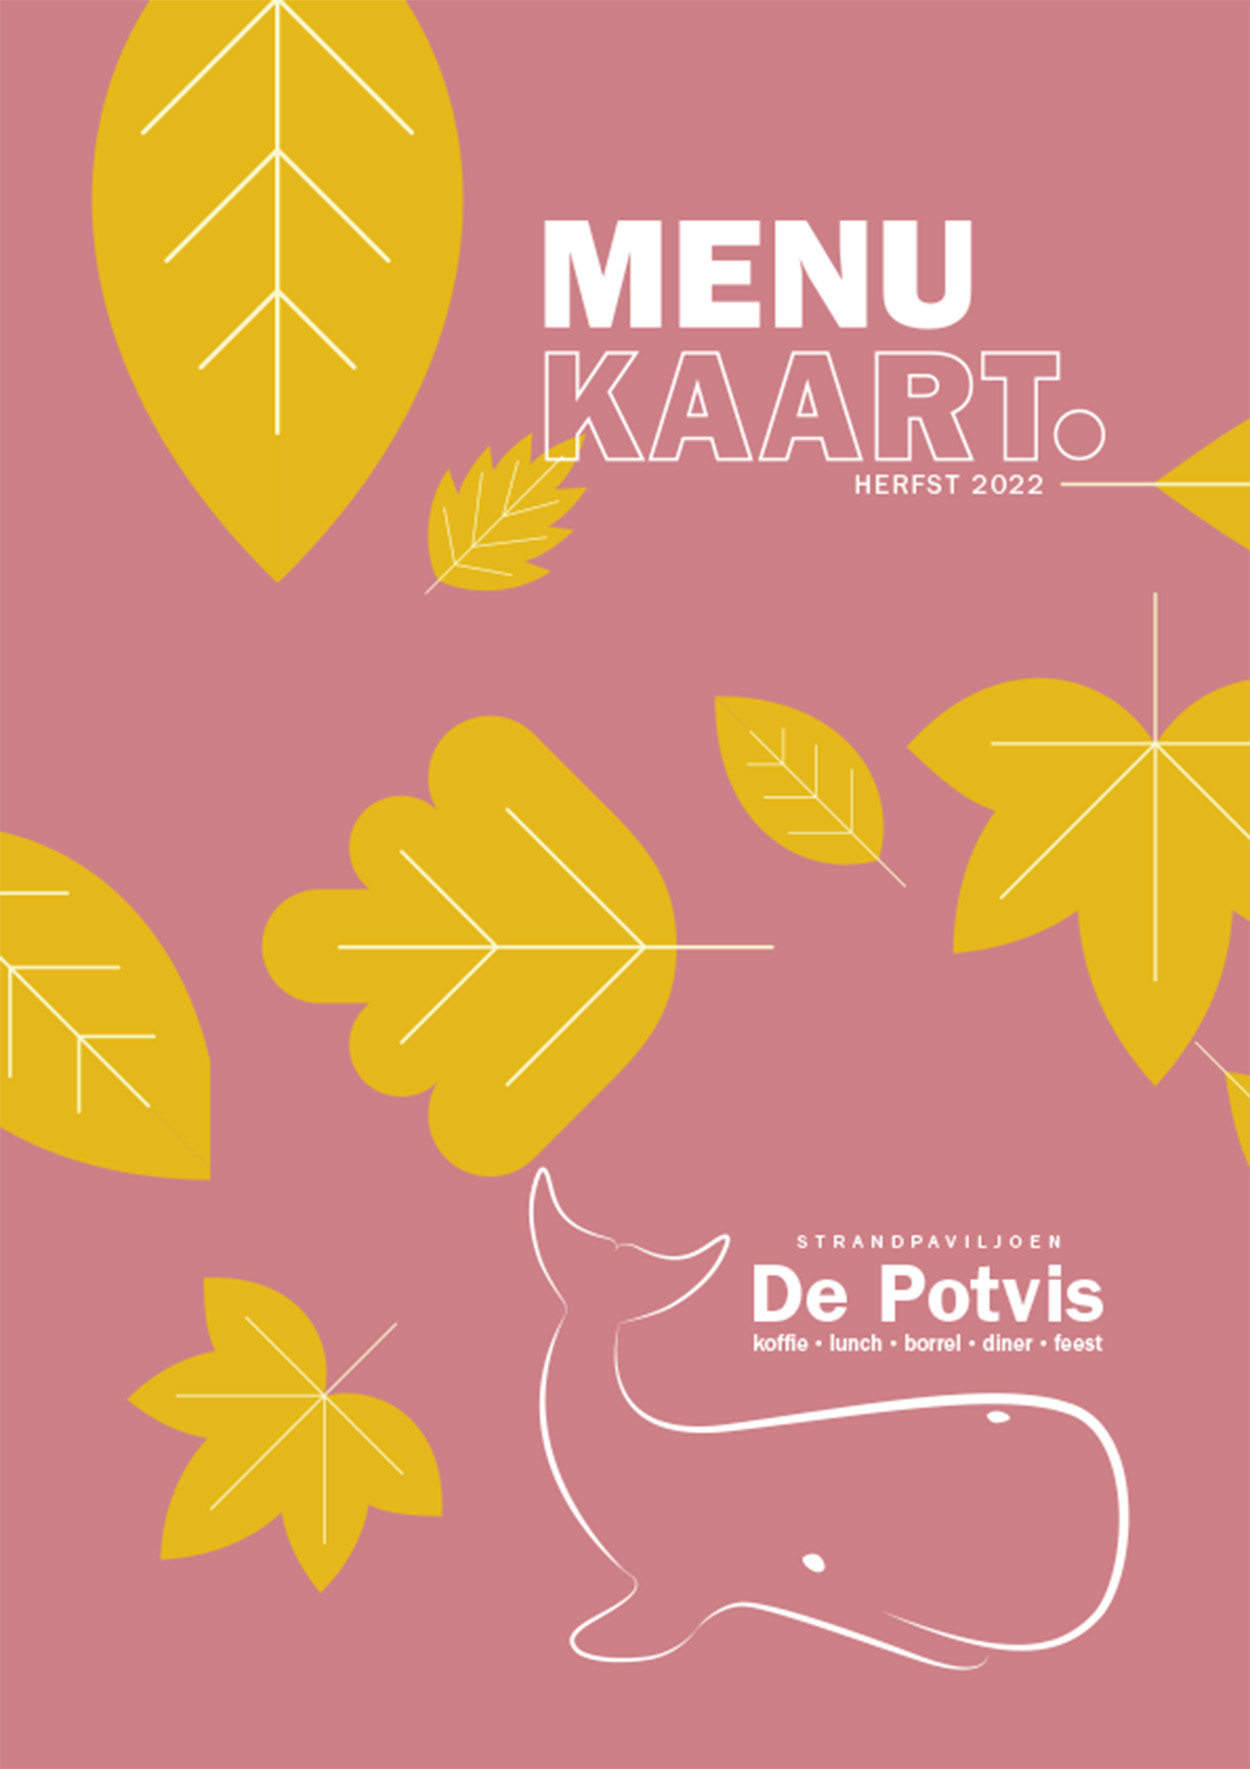 Menukaar Restaurant De Potvis